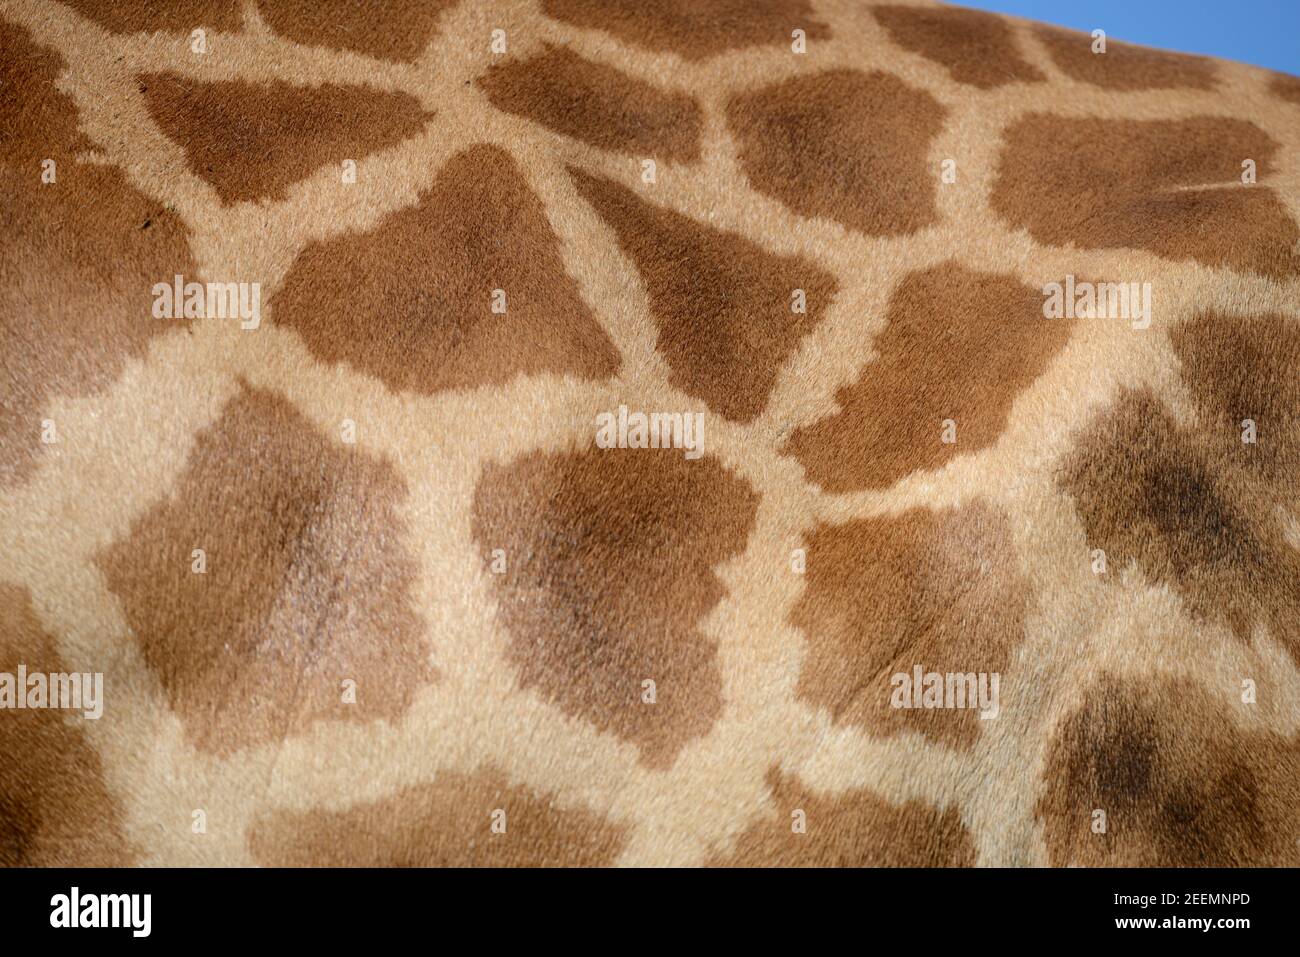 Detail of Natural Coat Pattern, Fur, Hair or Pelage of a Giraffe, Giraffa camelopardalis Stock Photo